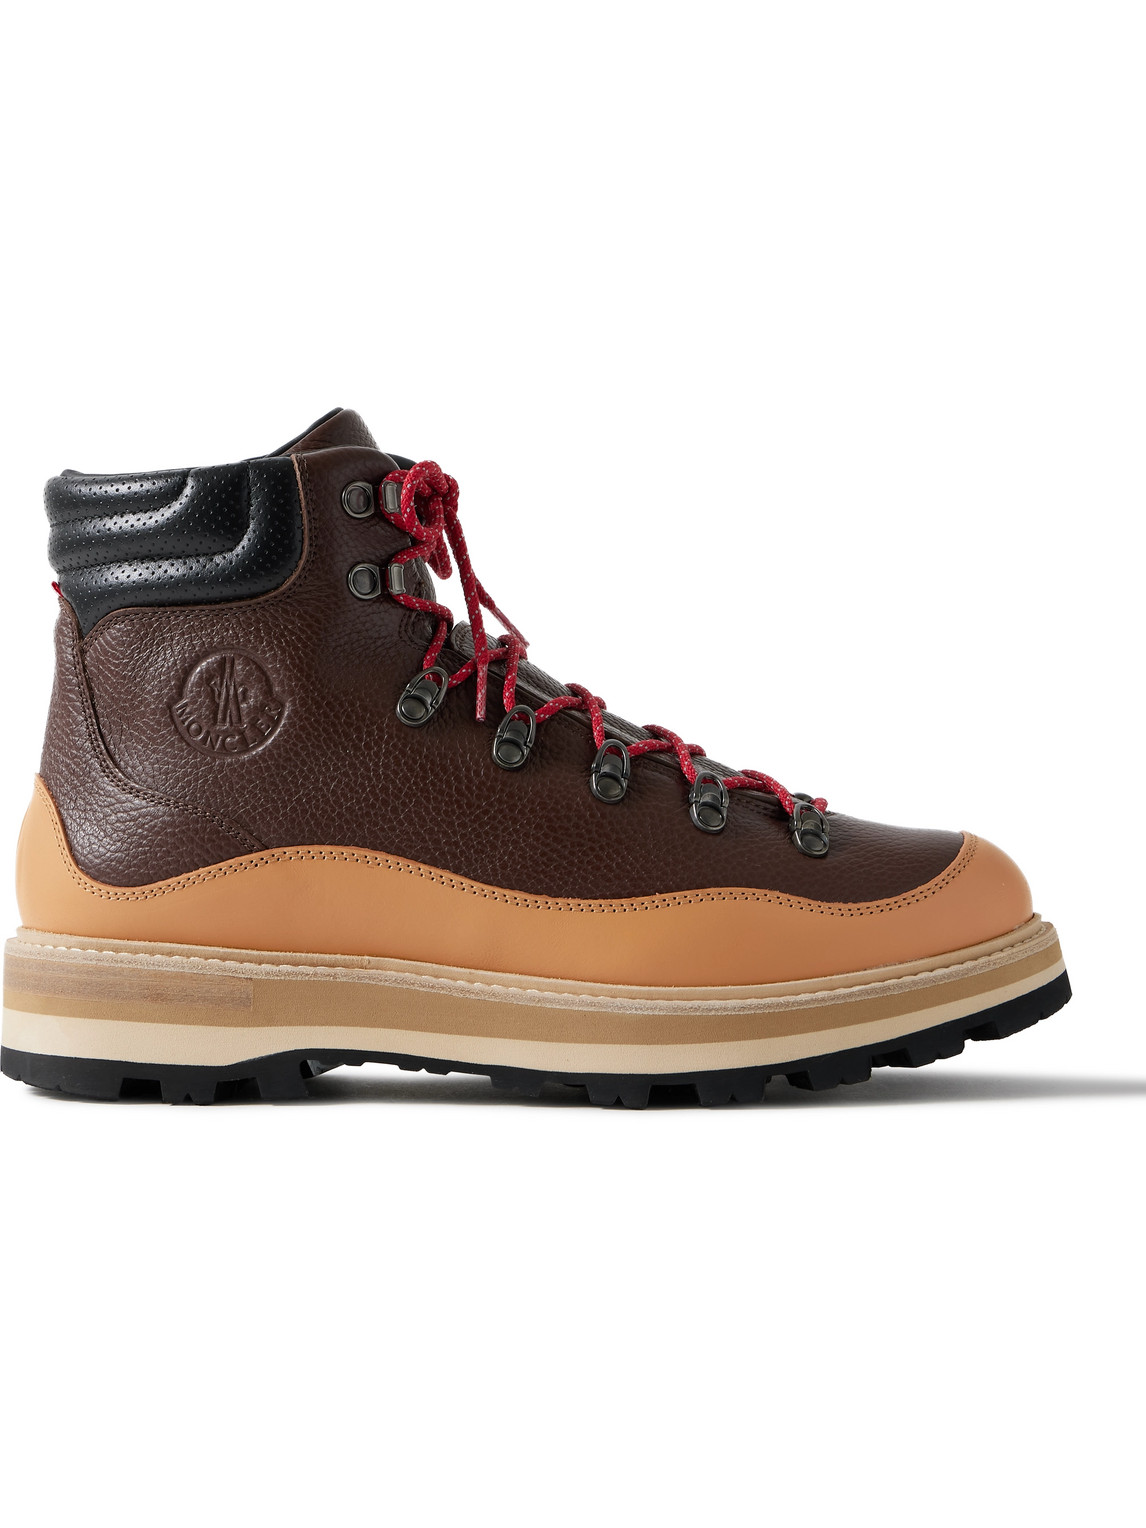 Moncler - Peka Trek Leather Hiking Boots - Men - Brown - EU 43 von Moncler